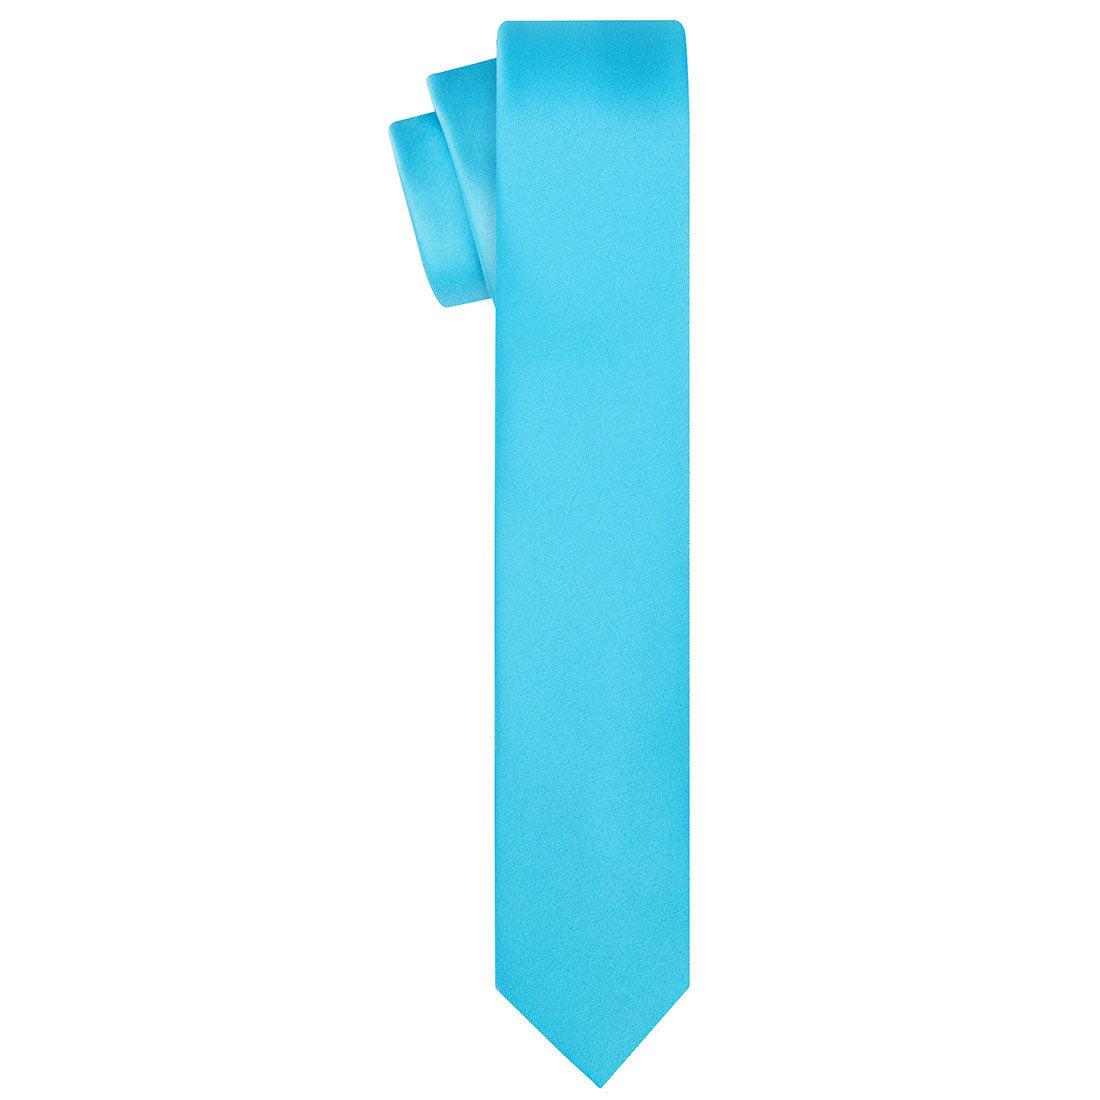 Turquoise Blue Satin Tie - Tie, bowtie, pocket square  | Kissties